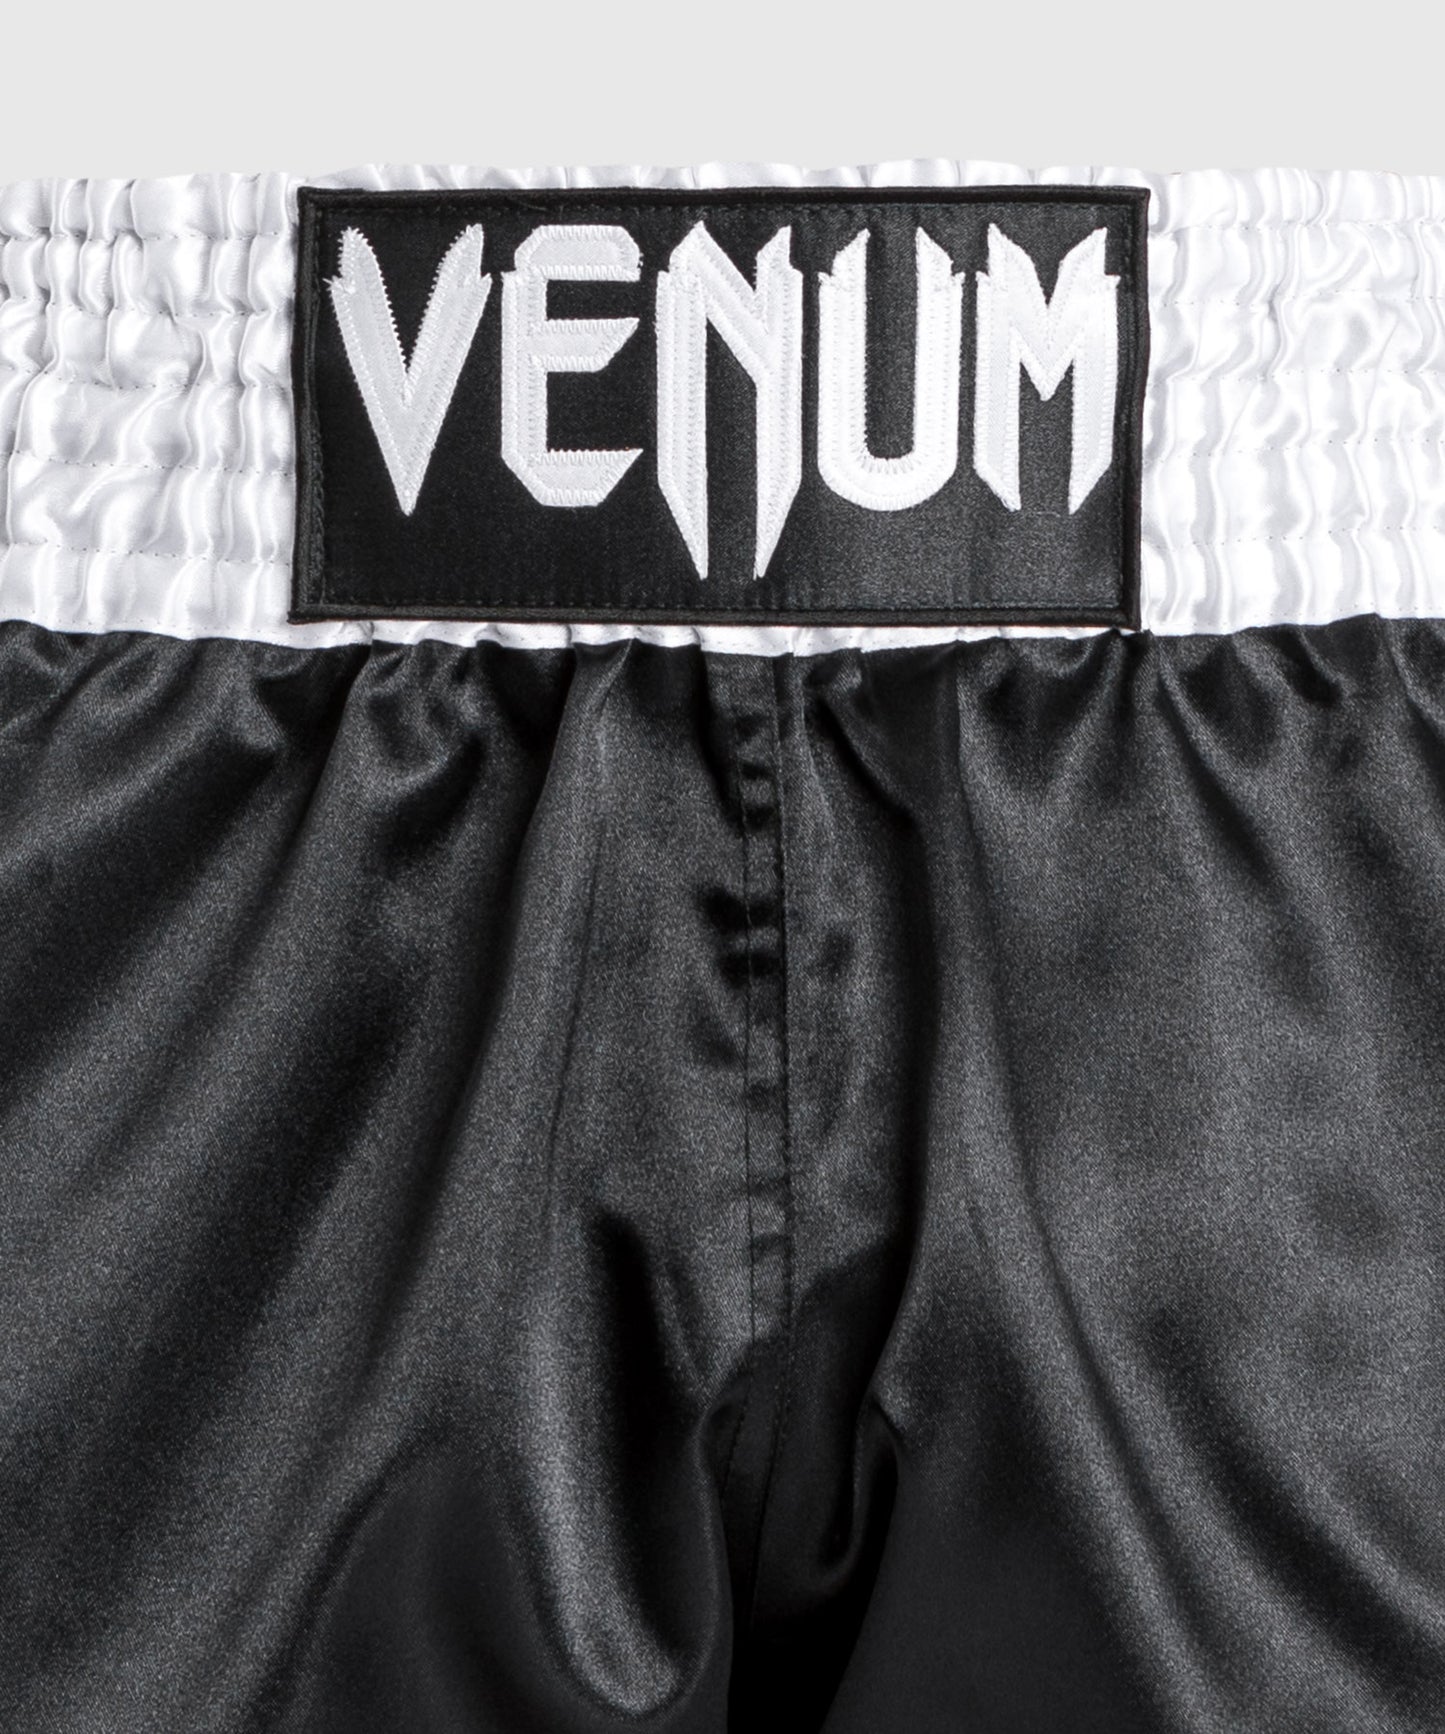 Venum Classic - Muay Thai Short Blanco/Negro/Blanco